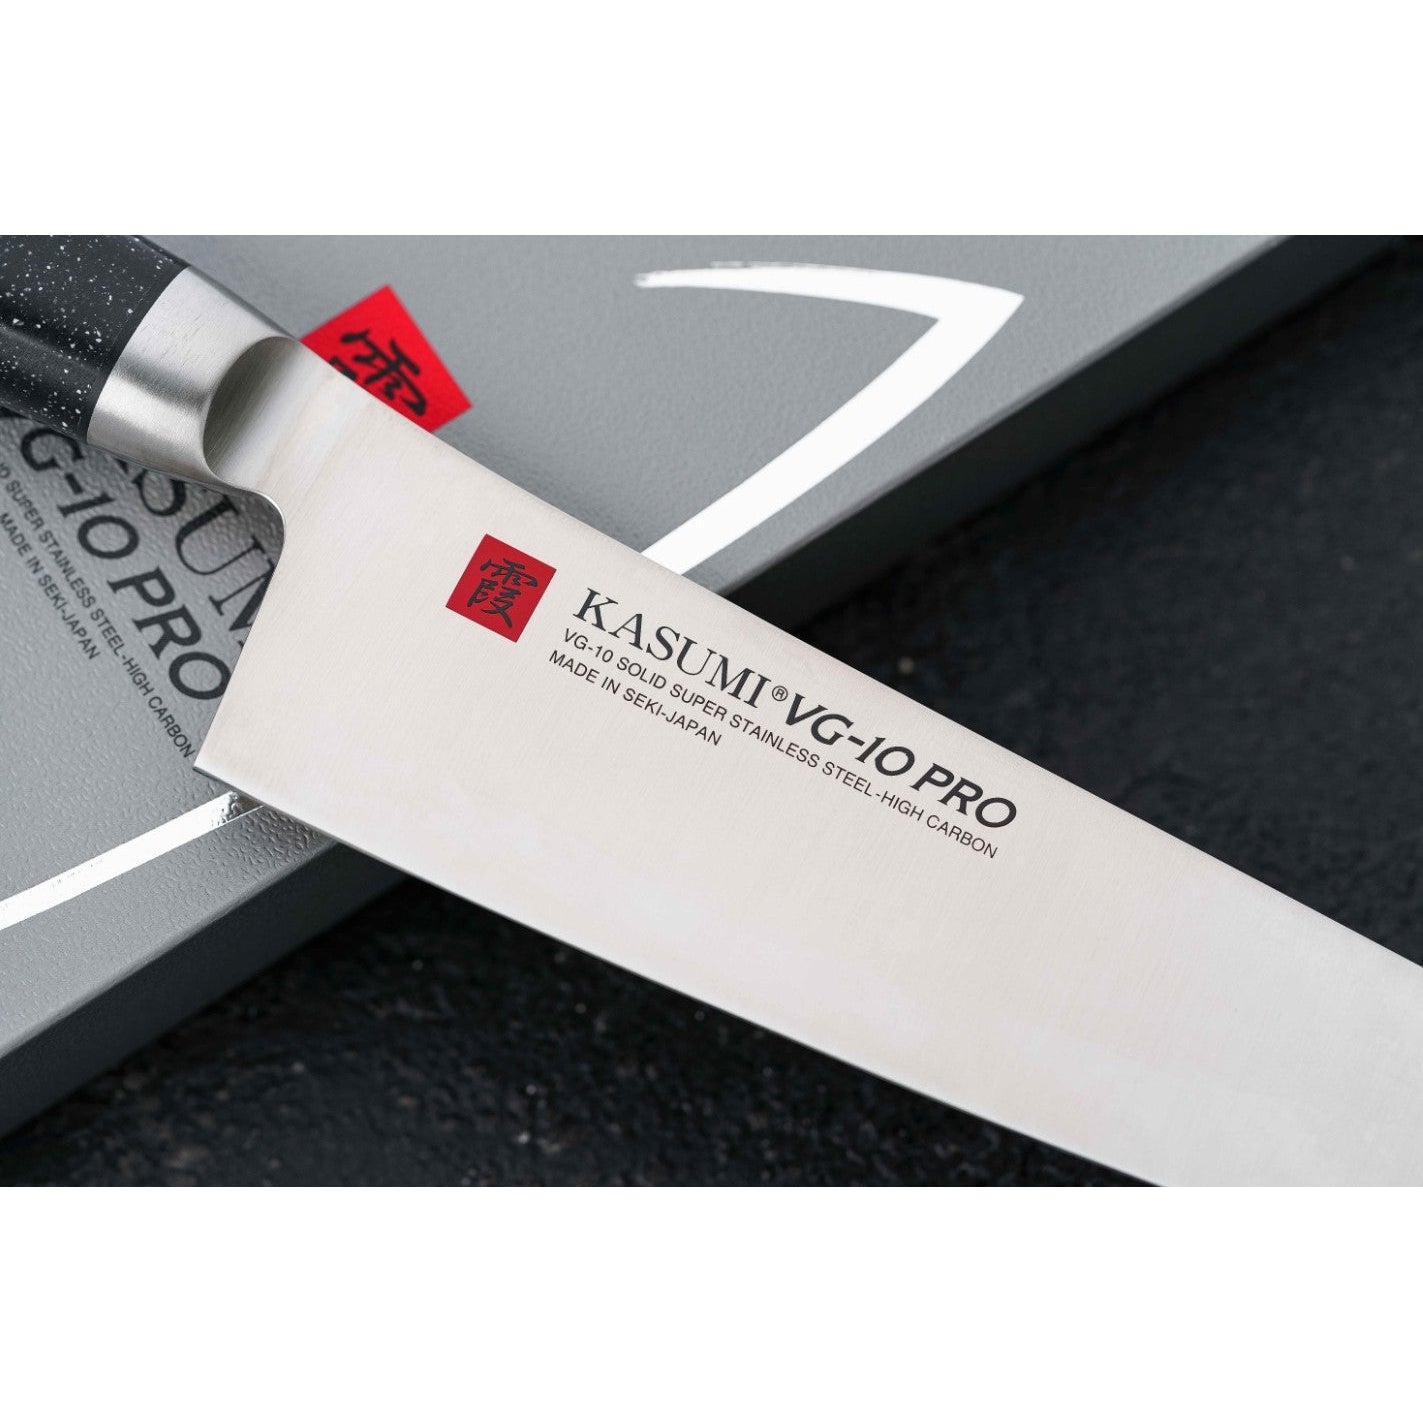 Yoshikawa Cutting Board Made in Japan Beige for Cooking 27 20cm Antibacterial Elastomer Soft per Blade 4286007 4286007